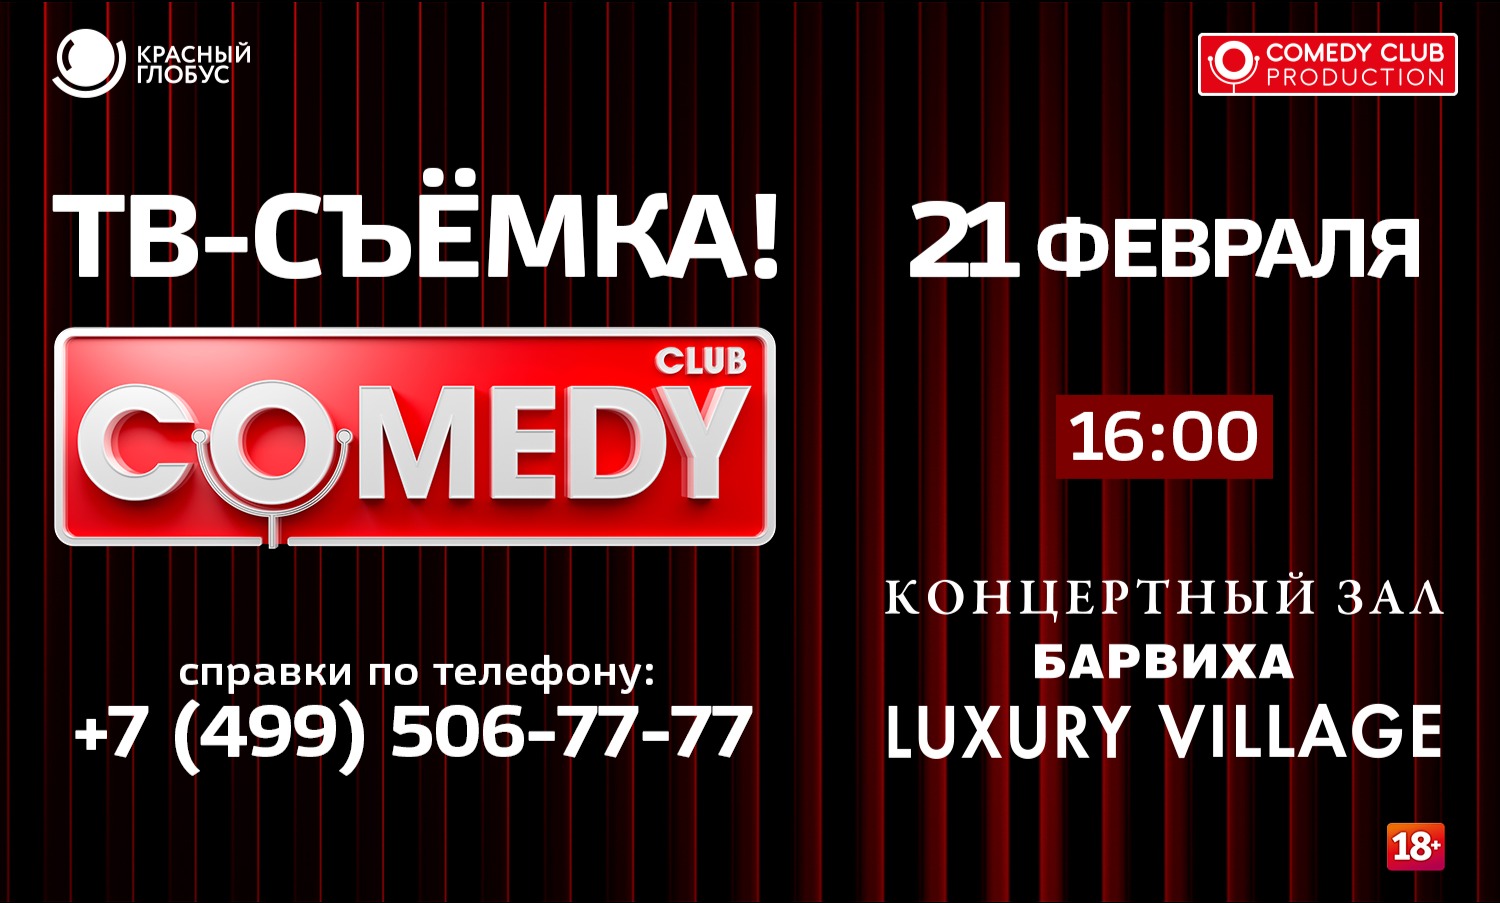 Цены на камеди клаб в москве 2024. Comedy Club Барвиха. Зал камеди клаб в Барвихе. Барвиха Luxury Village comedy Club. Программа камеди клаб.